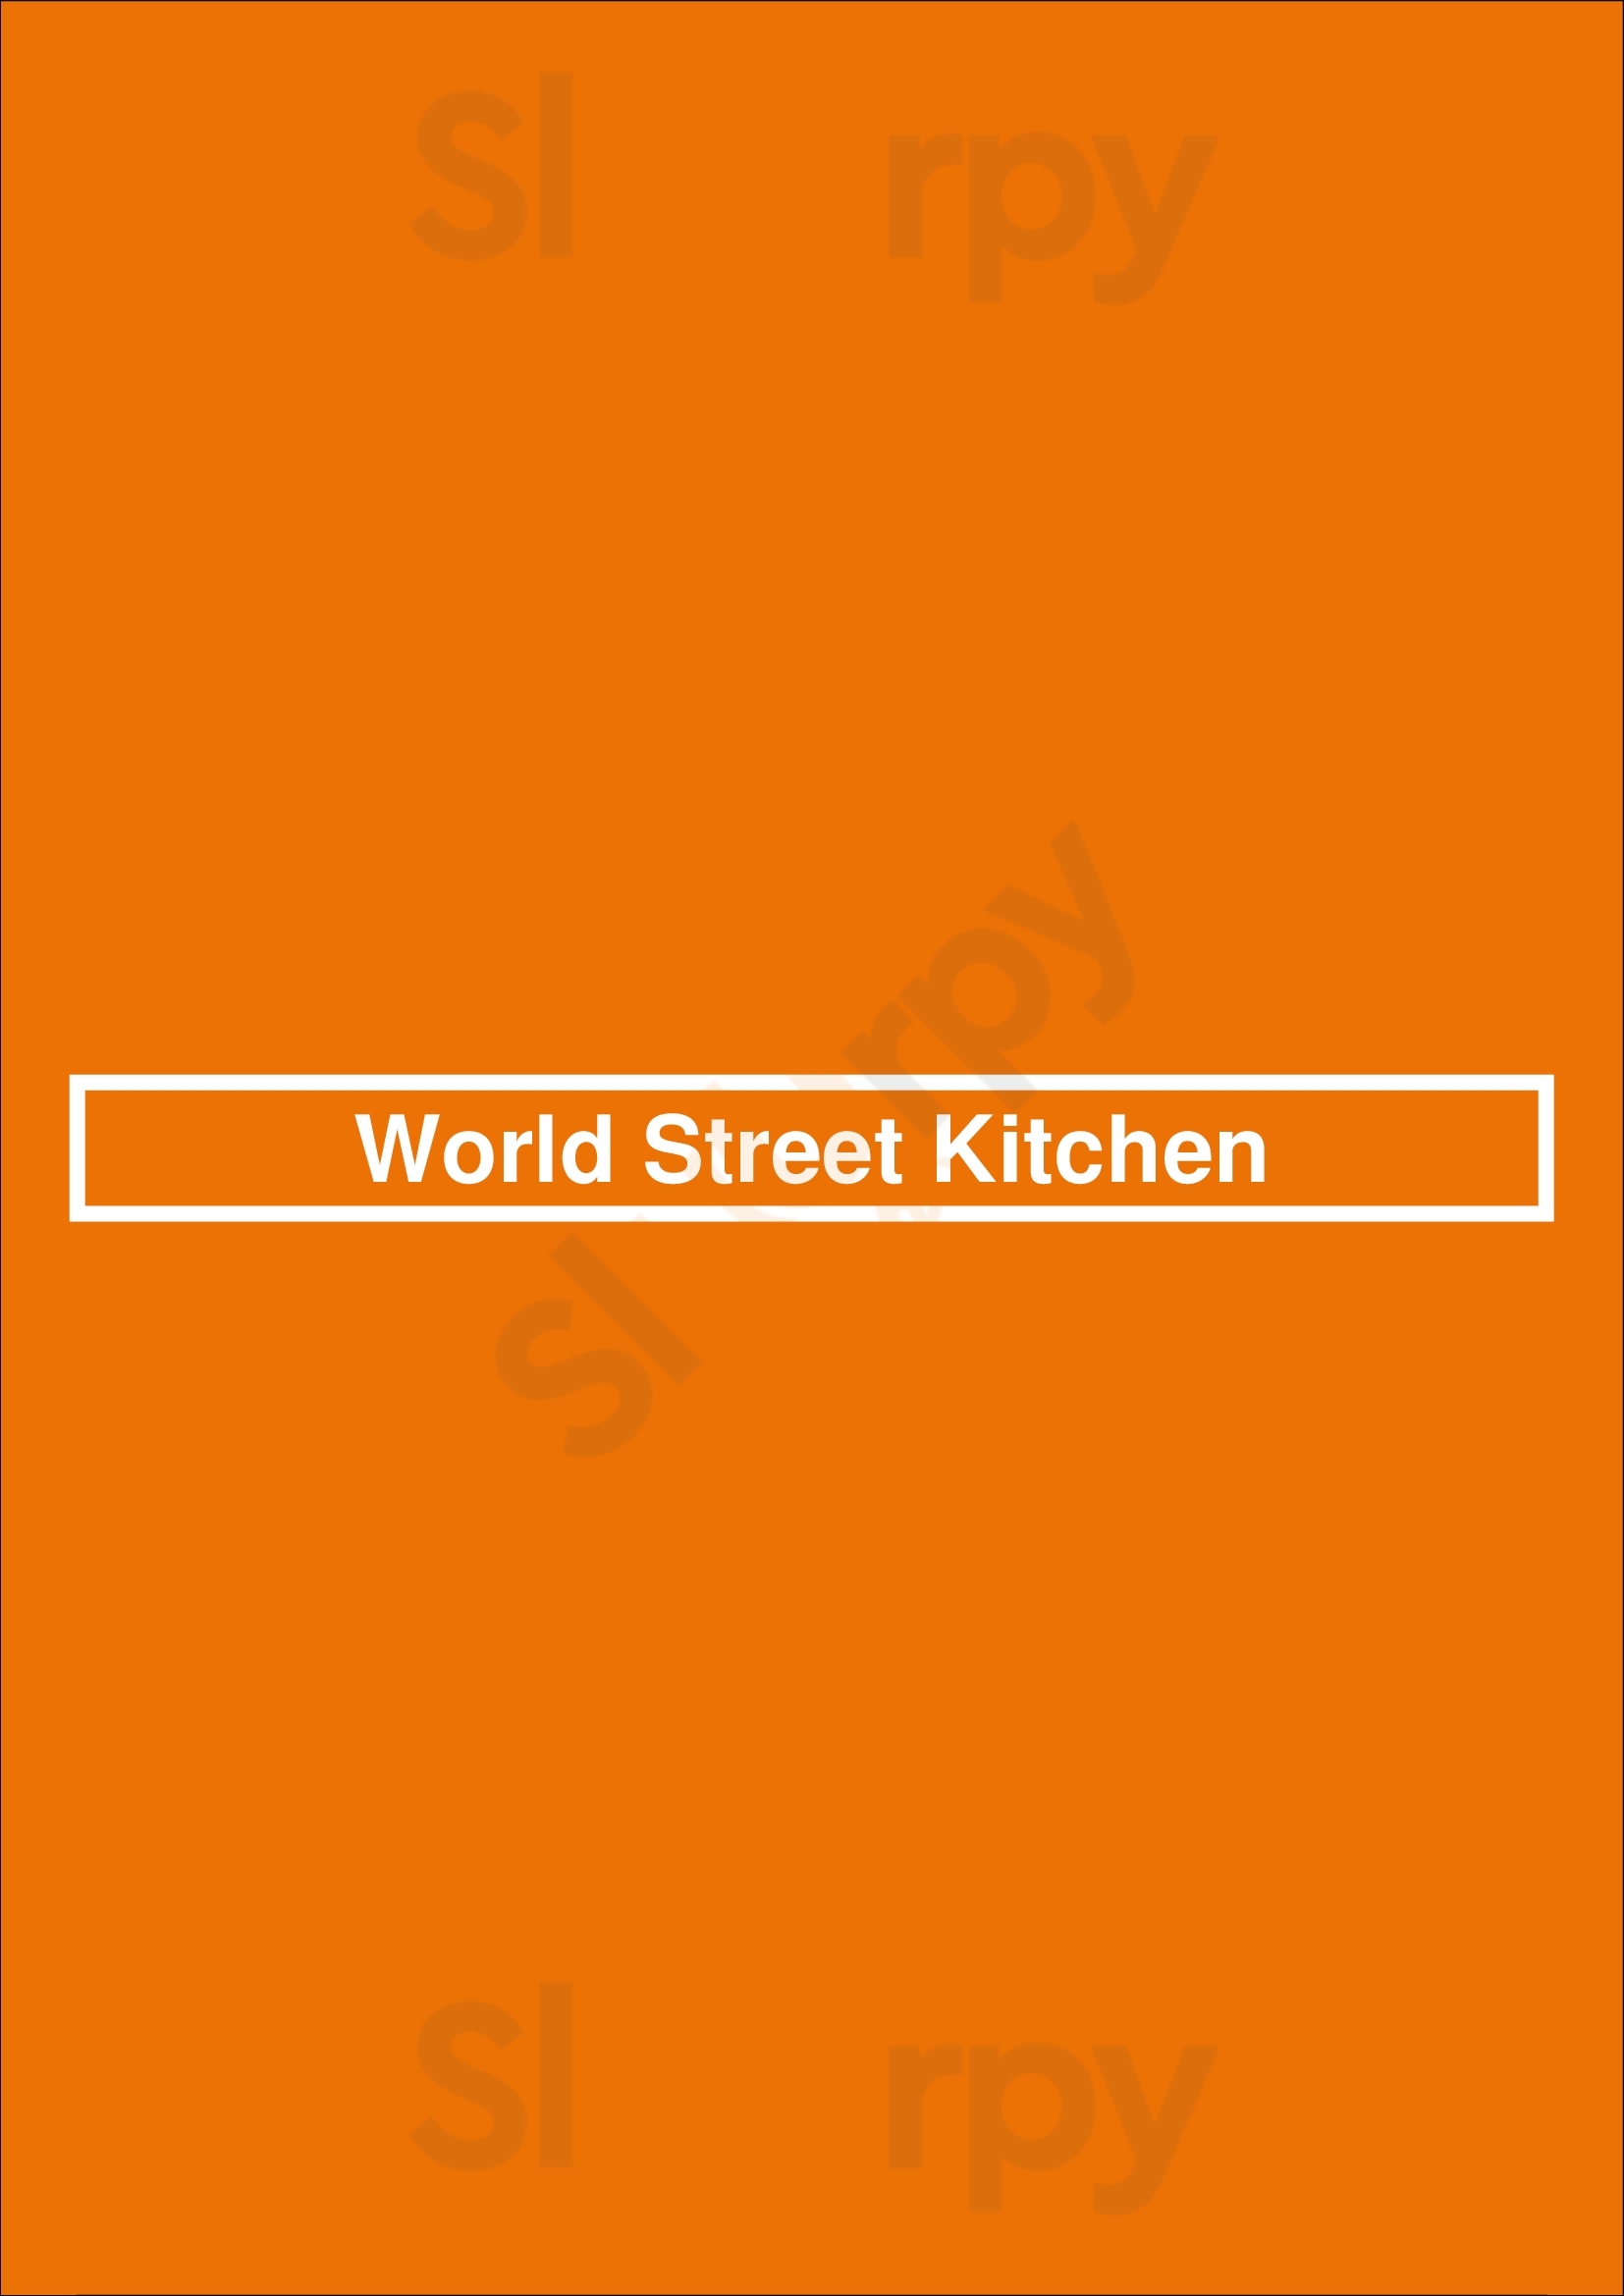 World Street Kitchen Minneapolis Menu - 1